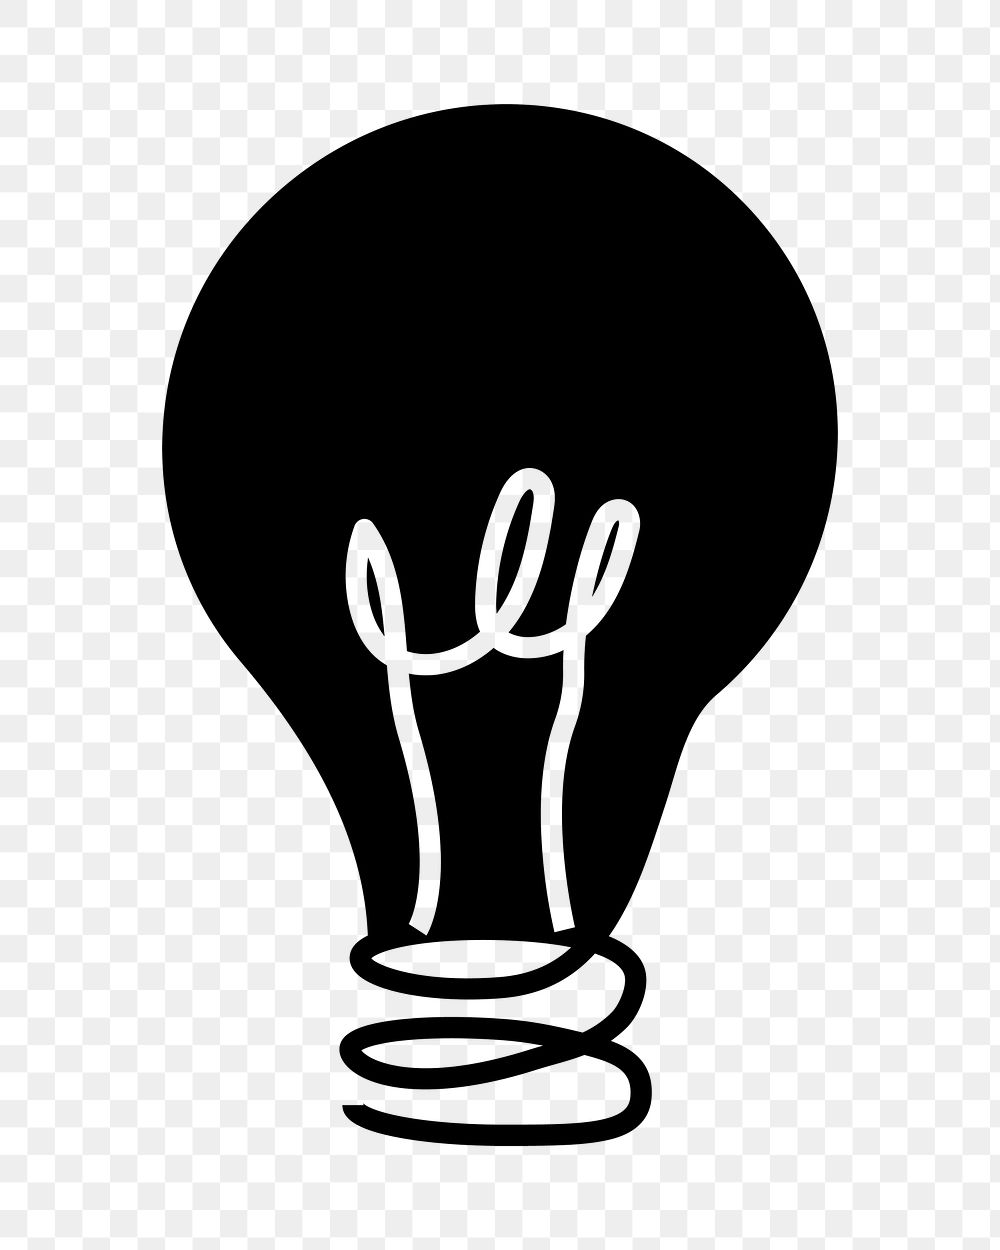 Light bulb png icon, line art design, transparent background